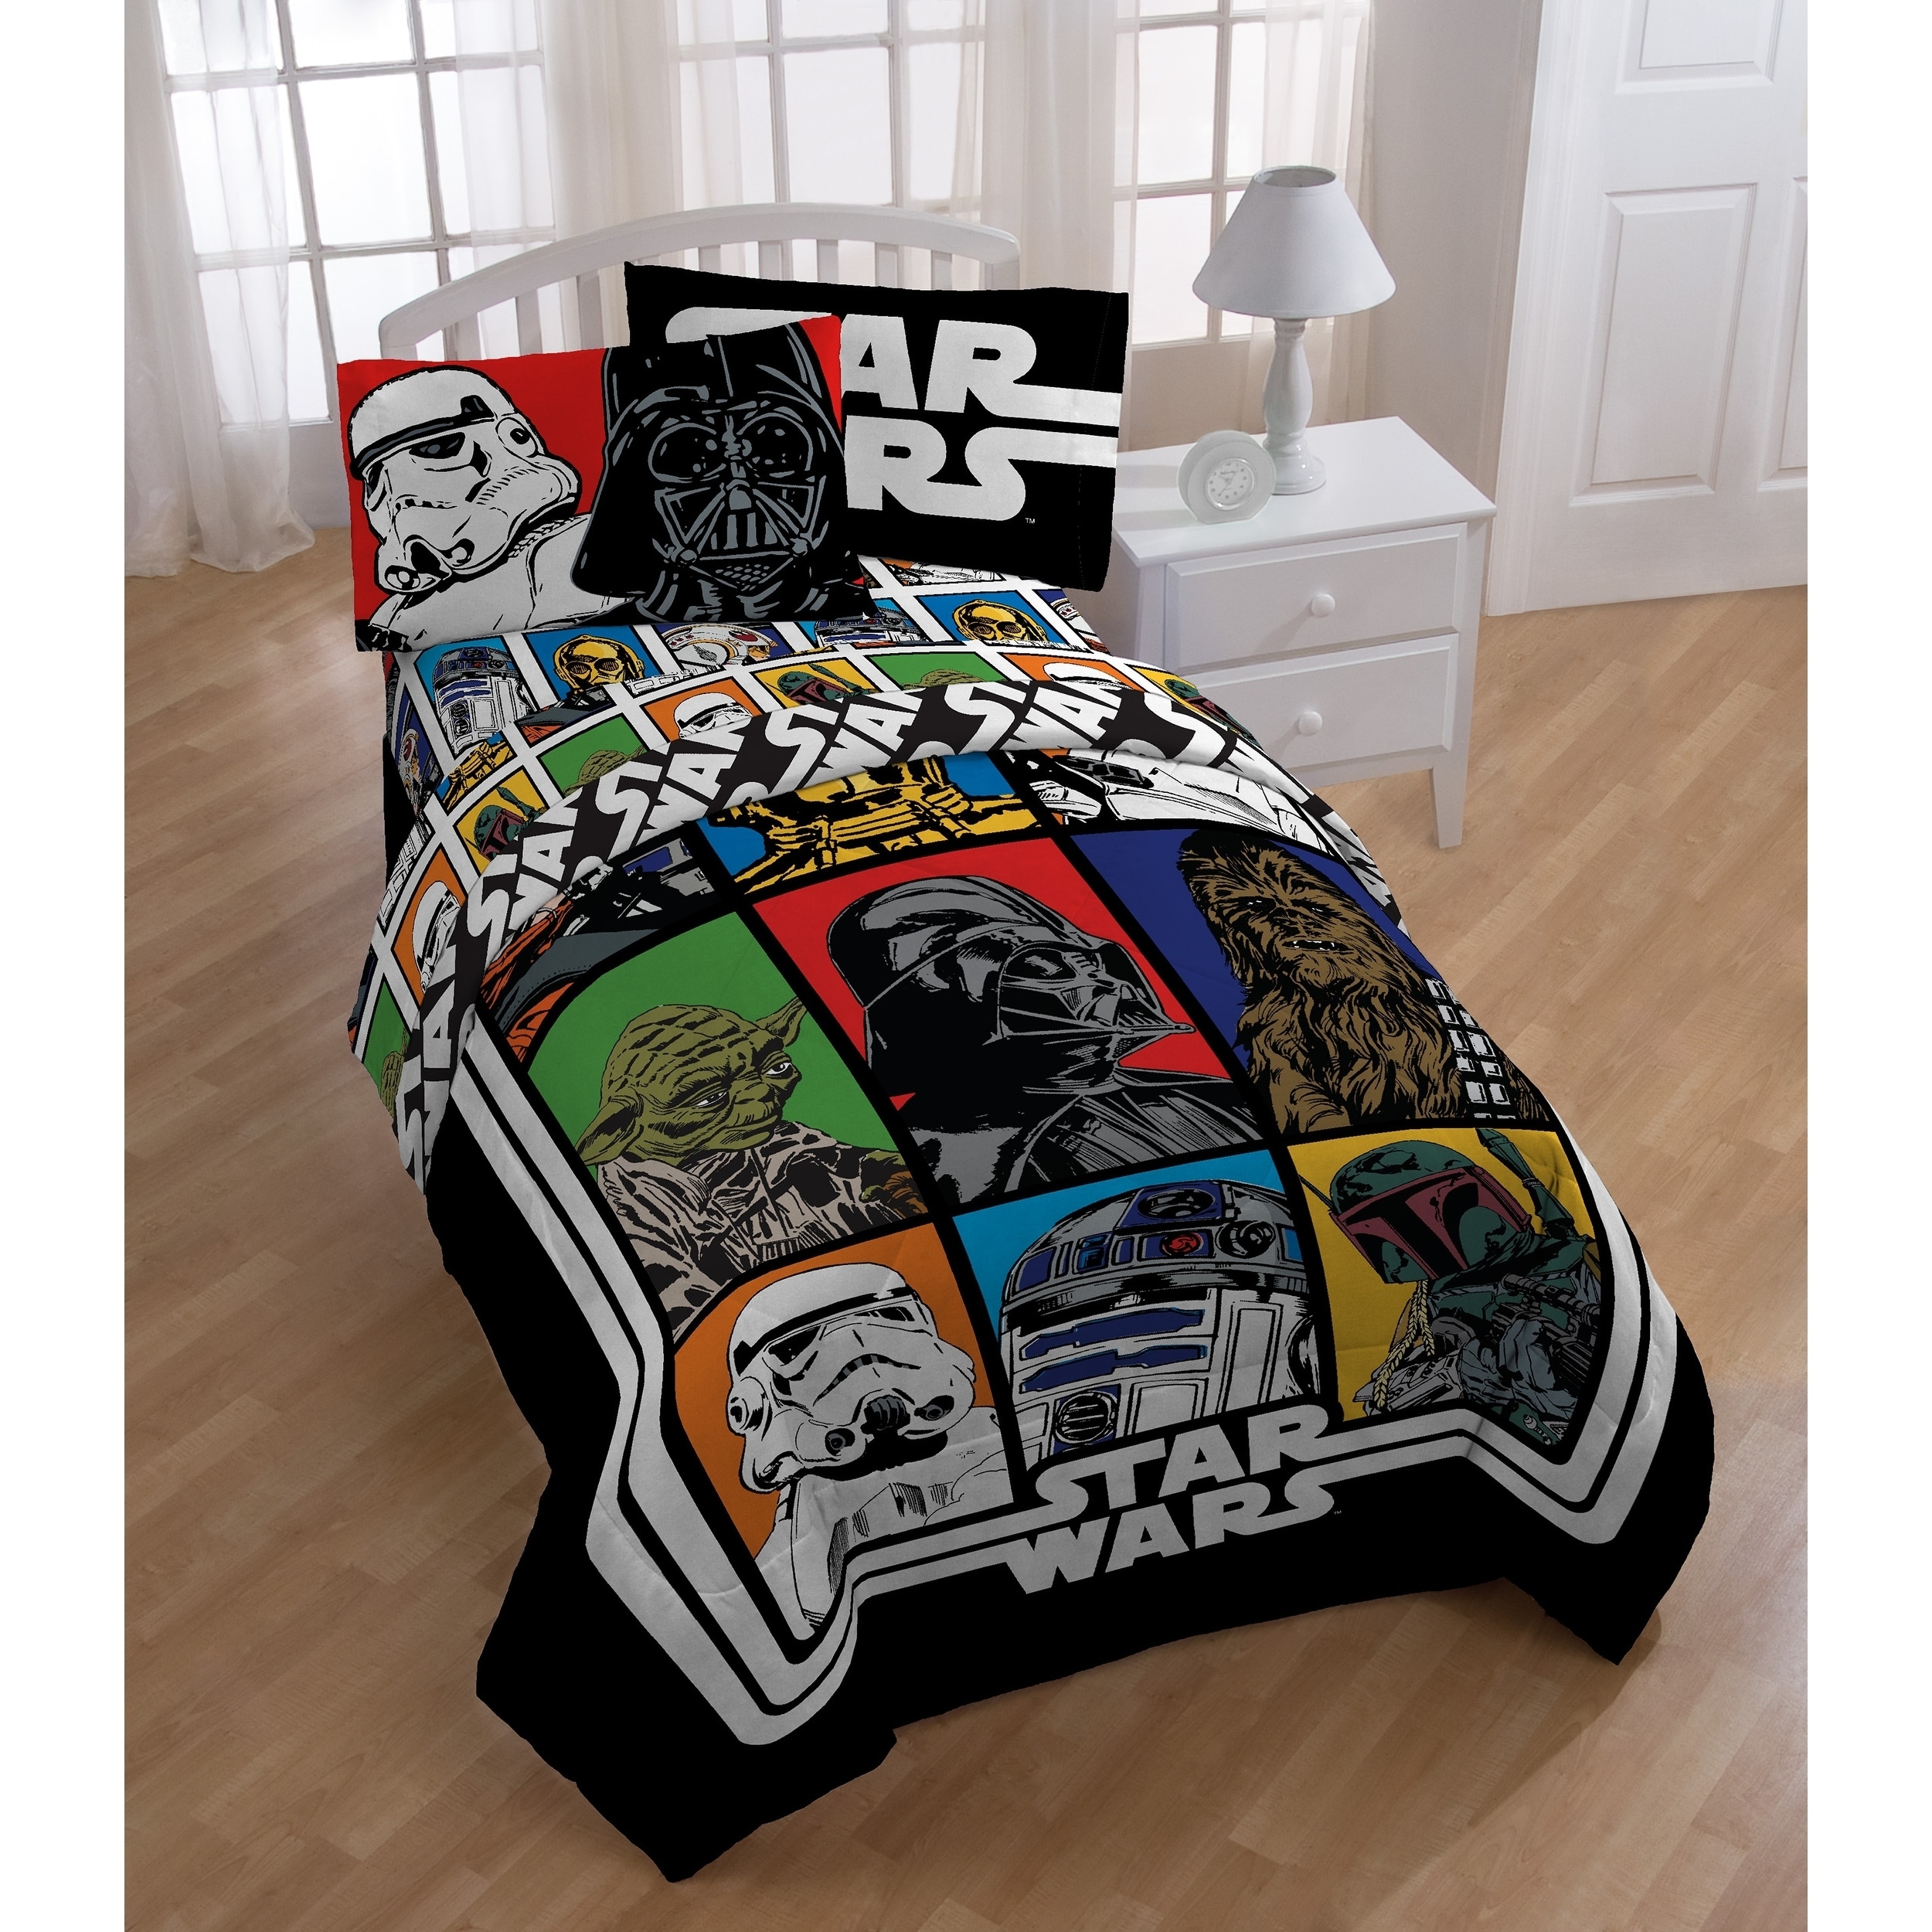 Disney Star Wars Classic Reversible Comforter Twin